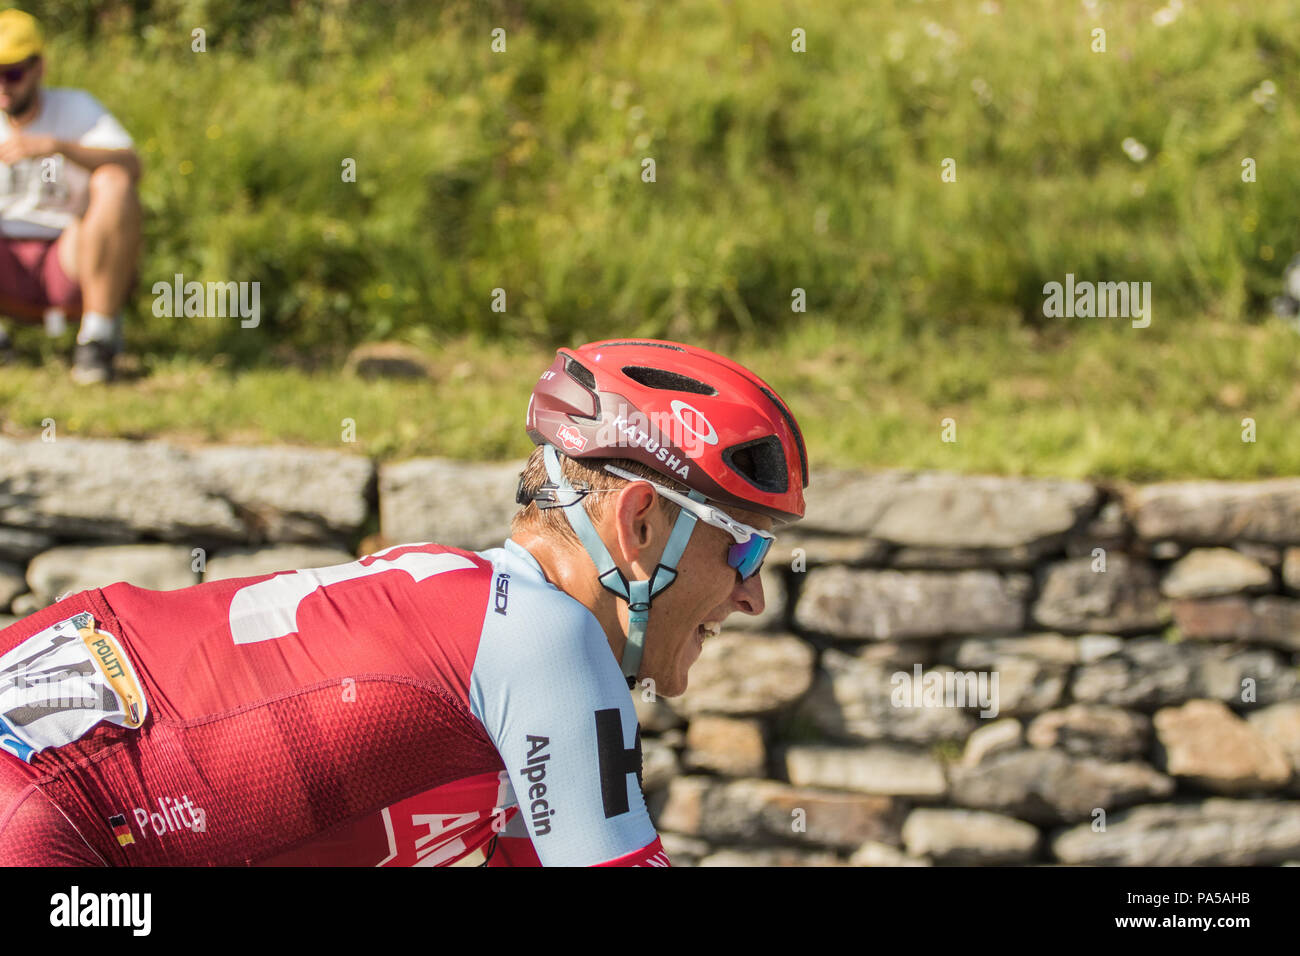 Nils Politt Katusha Alpecin Tour de France 2018 cycling stage 11 La Rosiere  Rhone Alpes Savoie France Stock Photo - Alamy